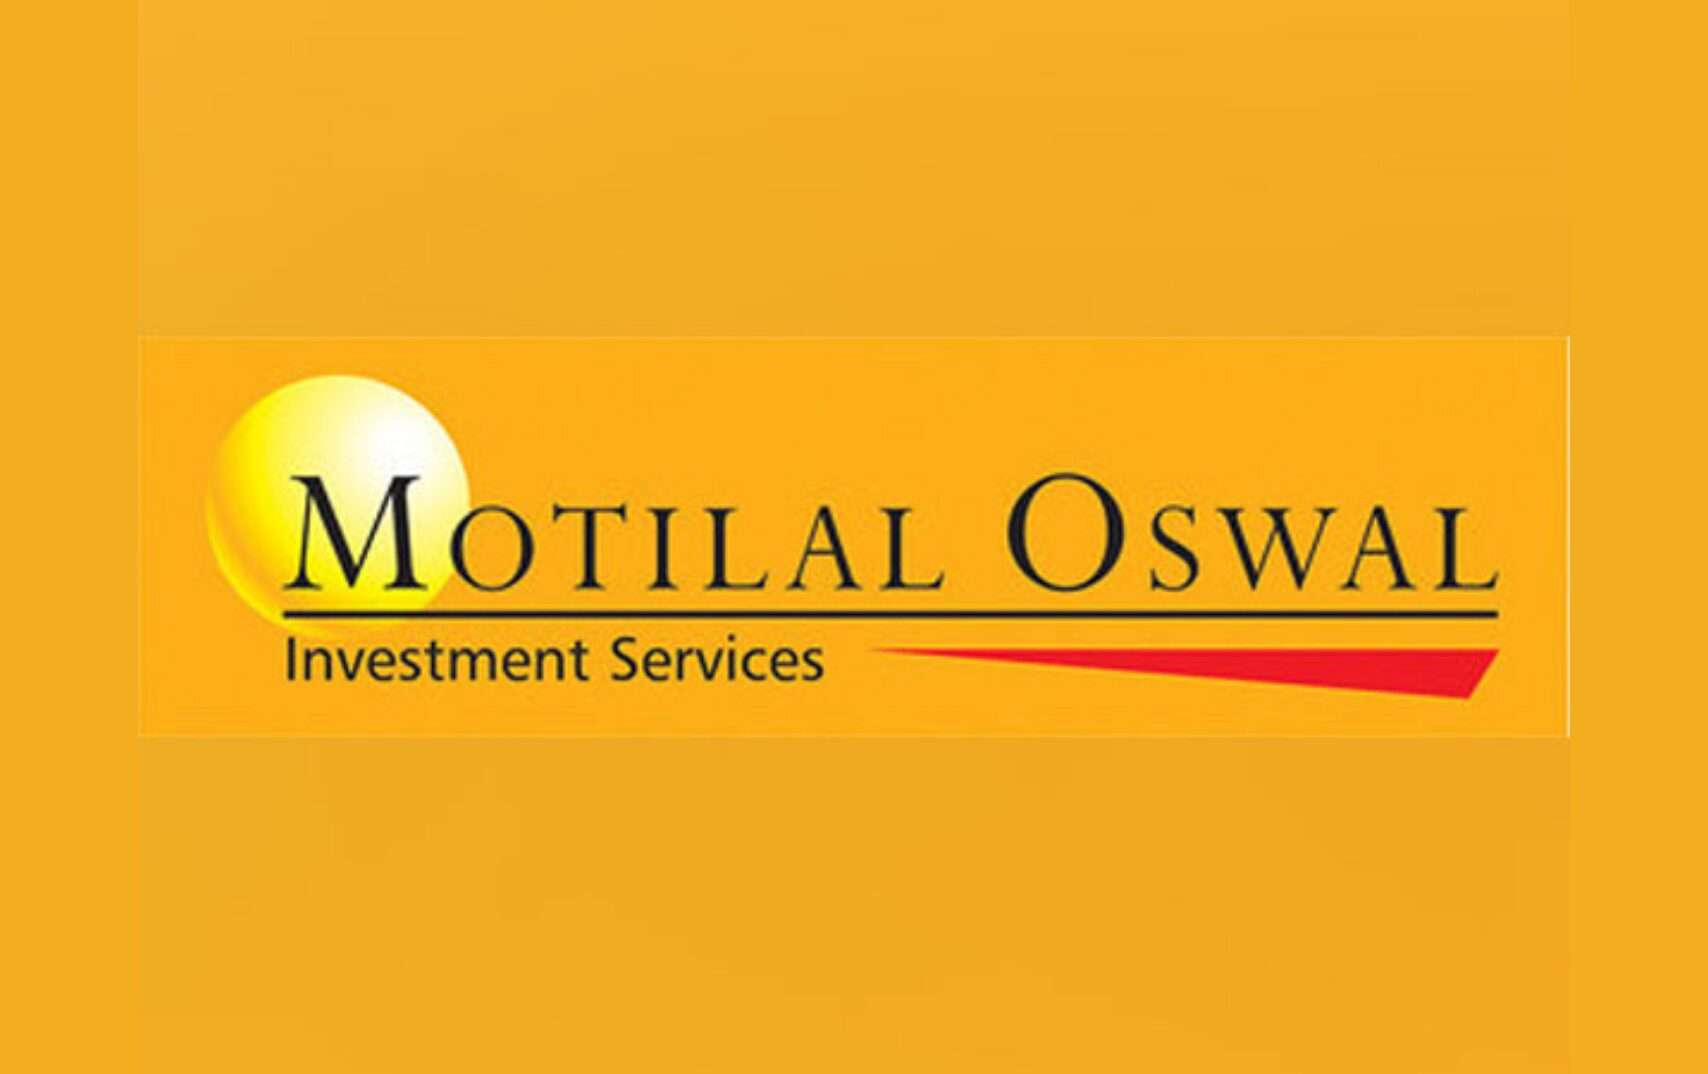 Motilal Oswal 2021